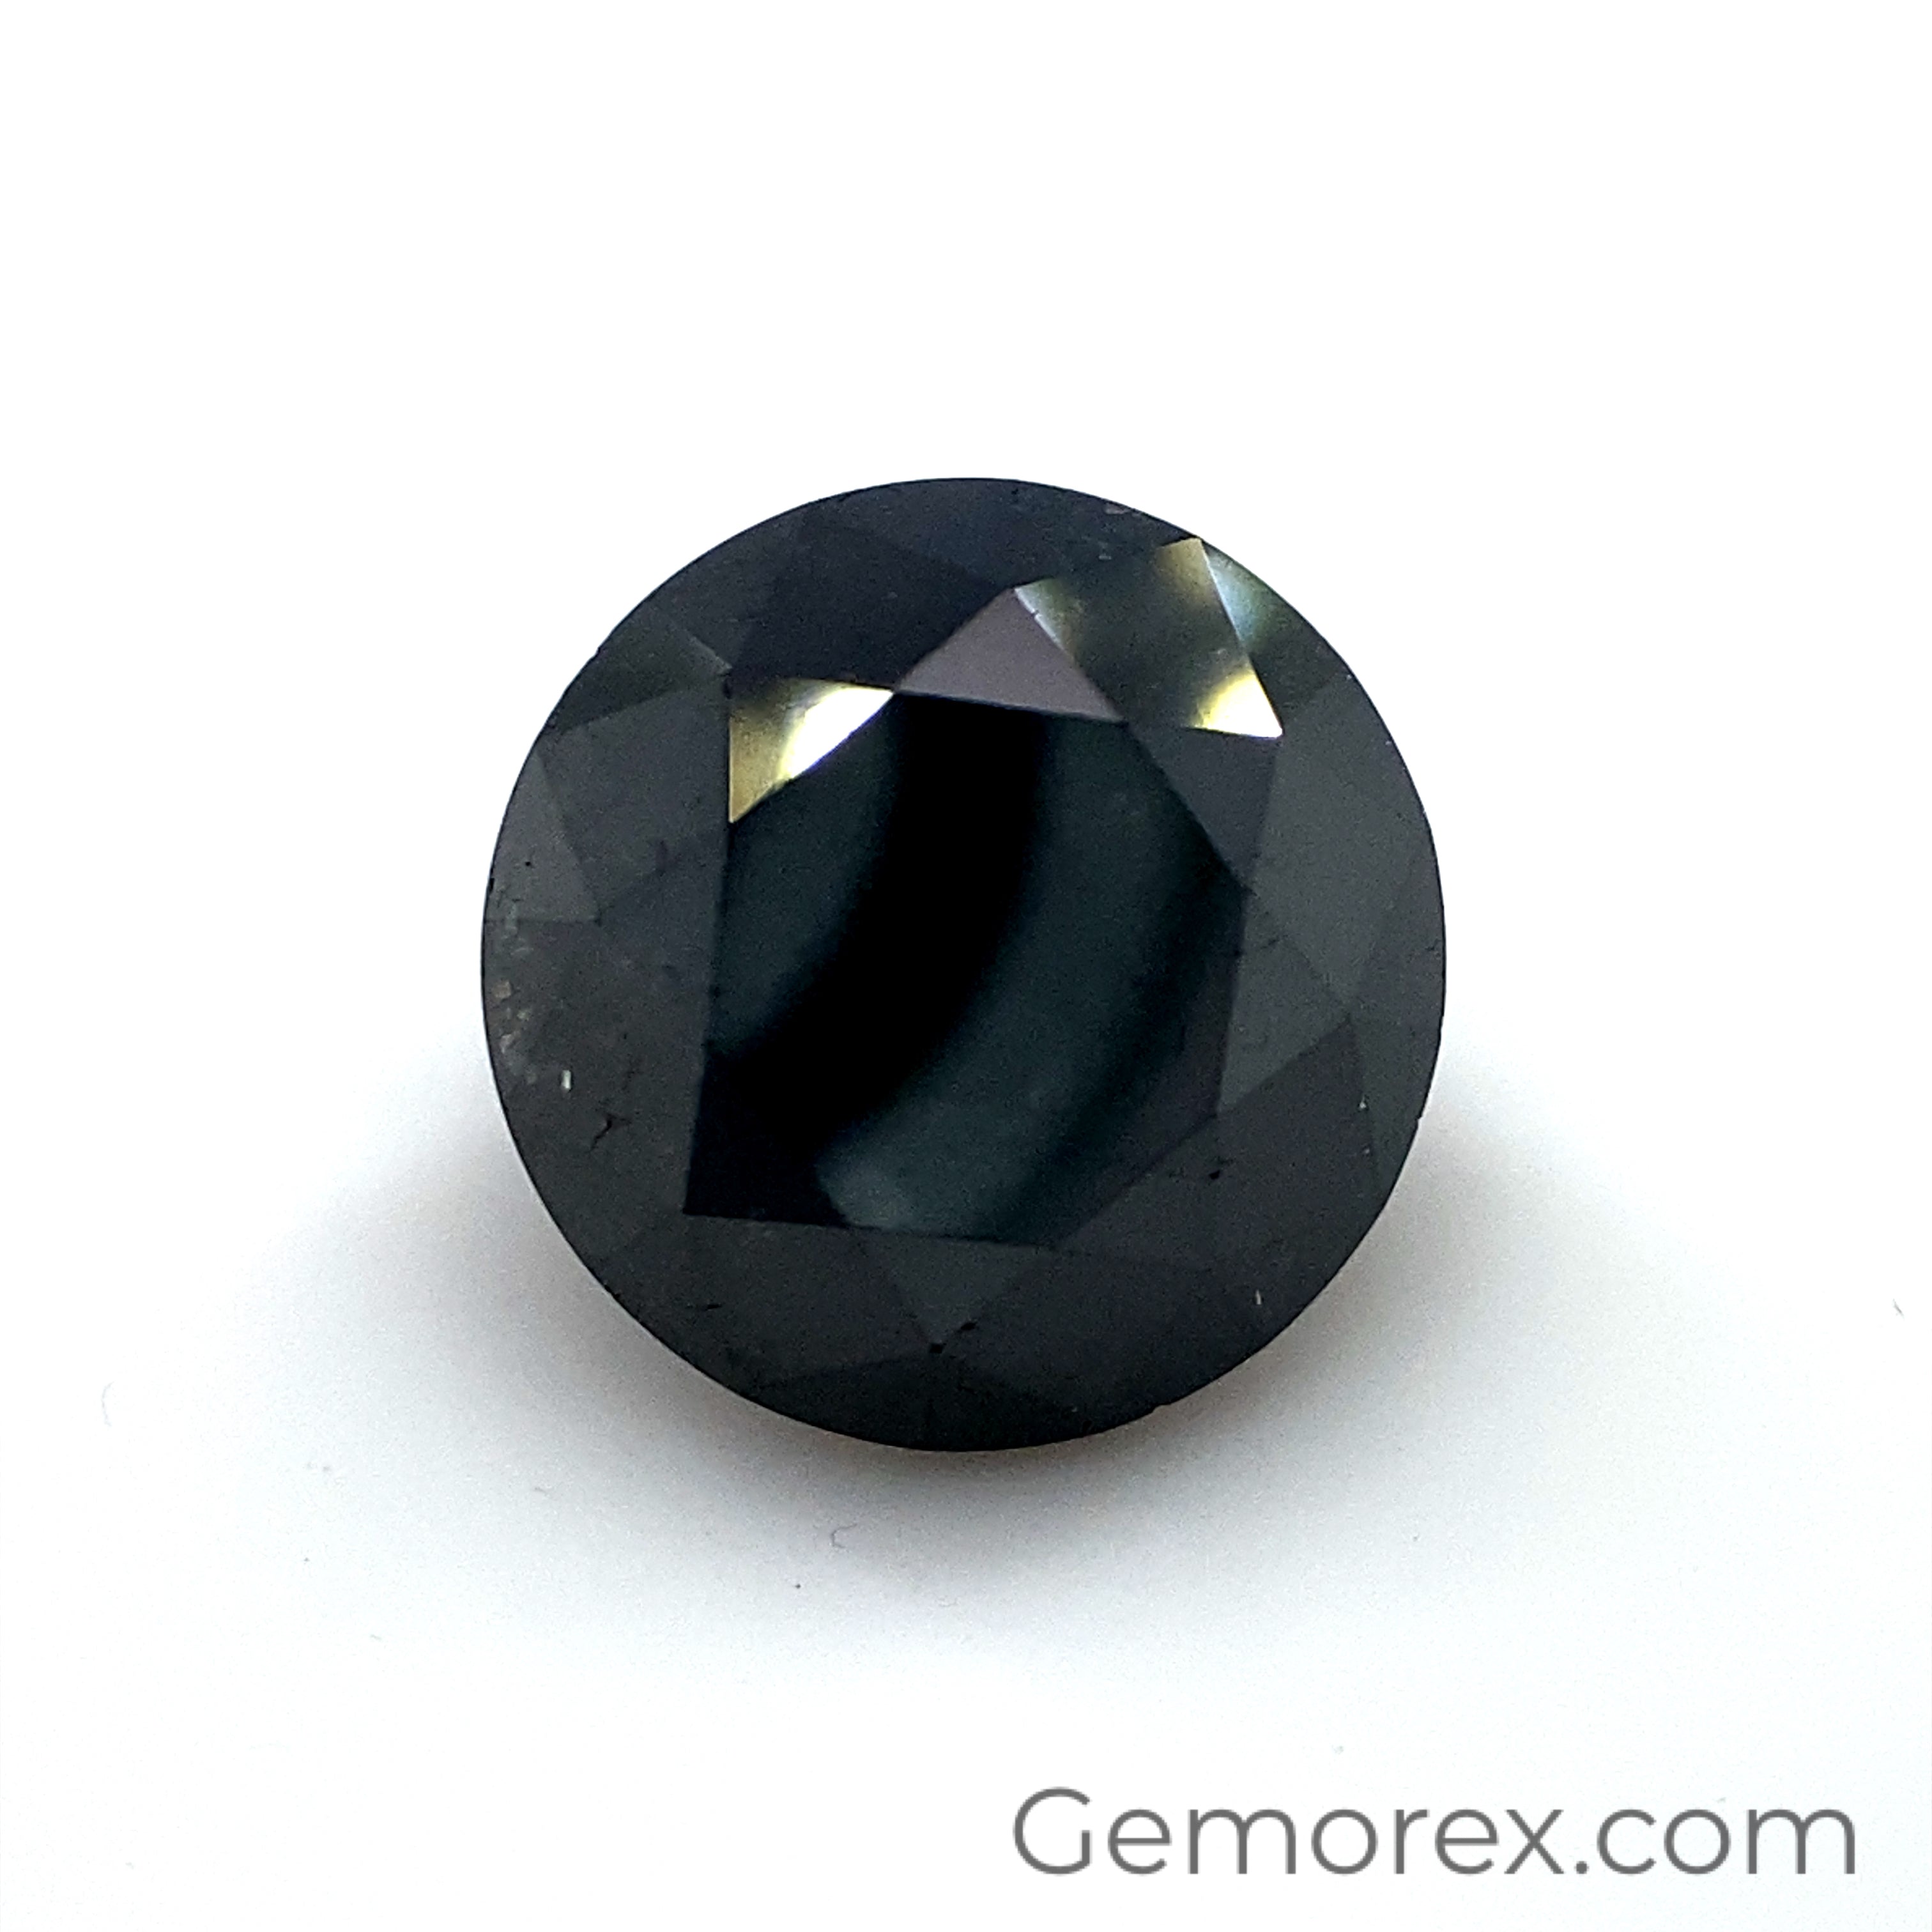 GEMORO BrilliantSpa Black Diamond (Slate) – THE SPARKLE EXPERTS